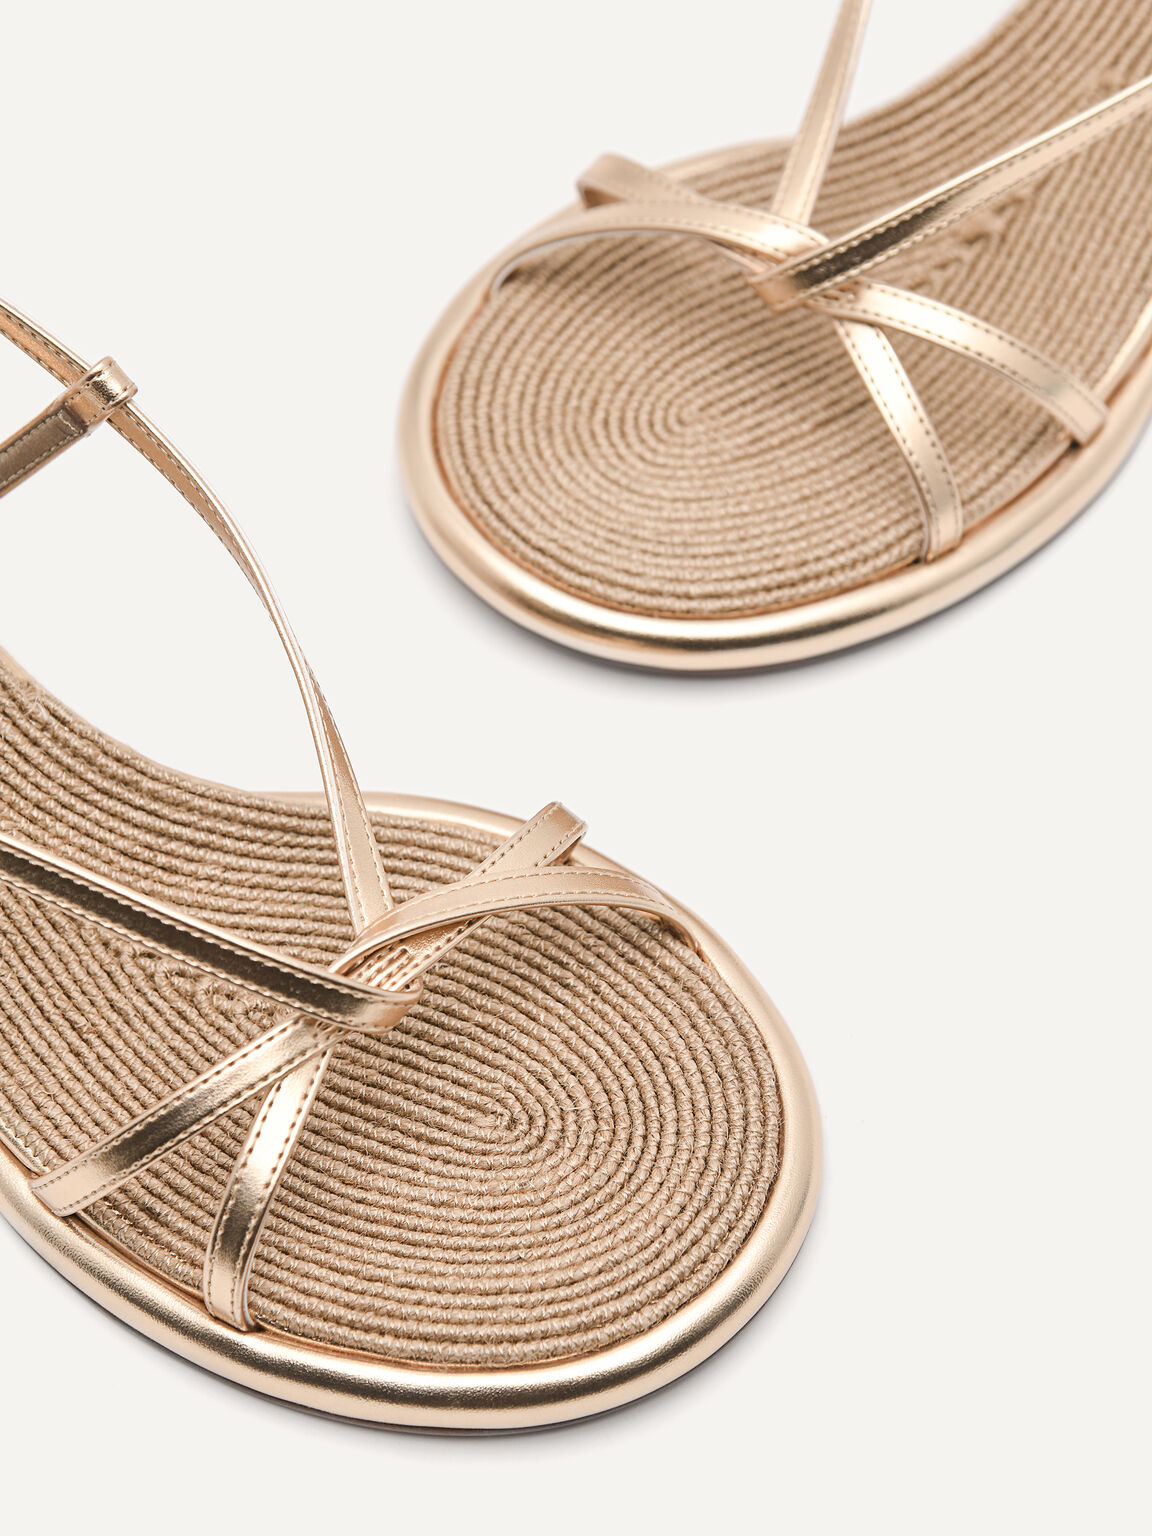 Riata Sandals, Gold